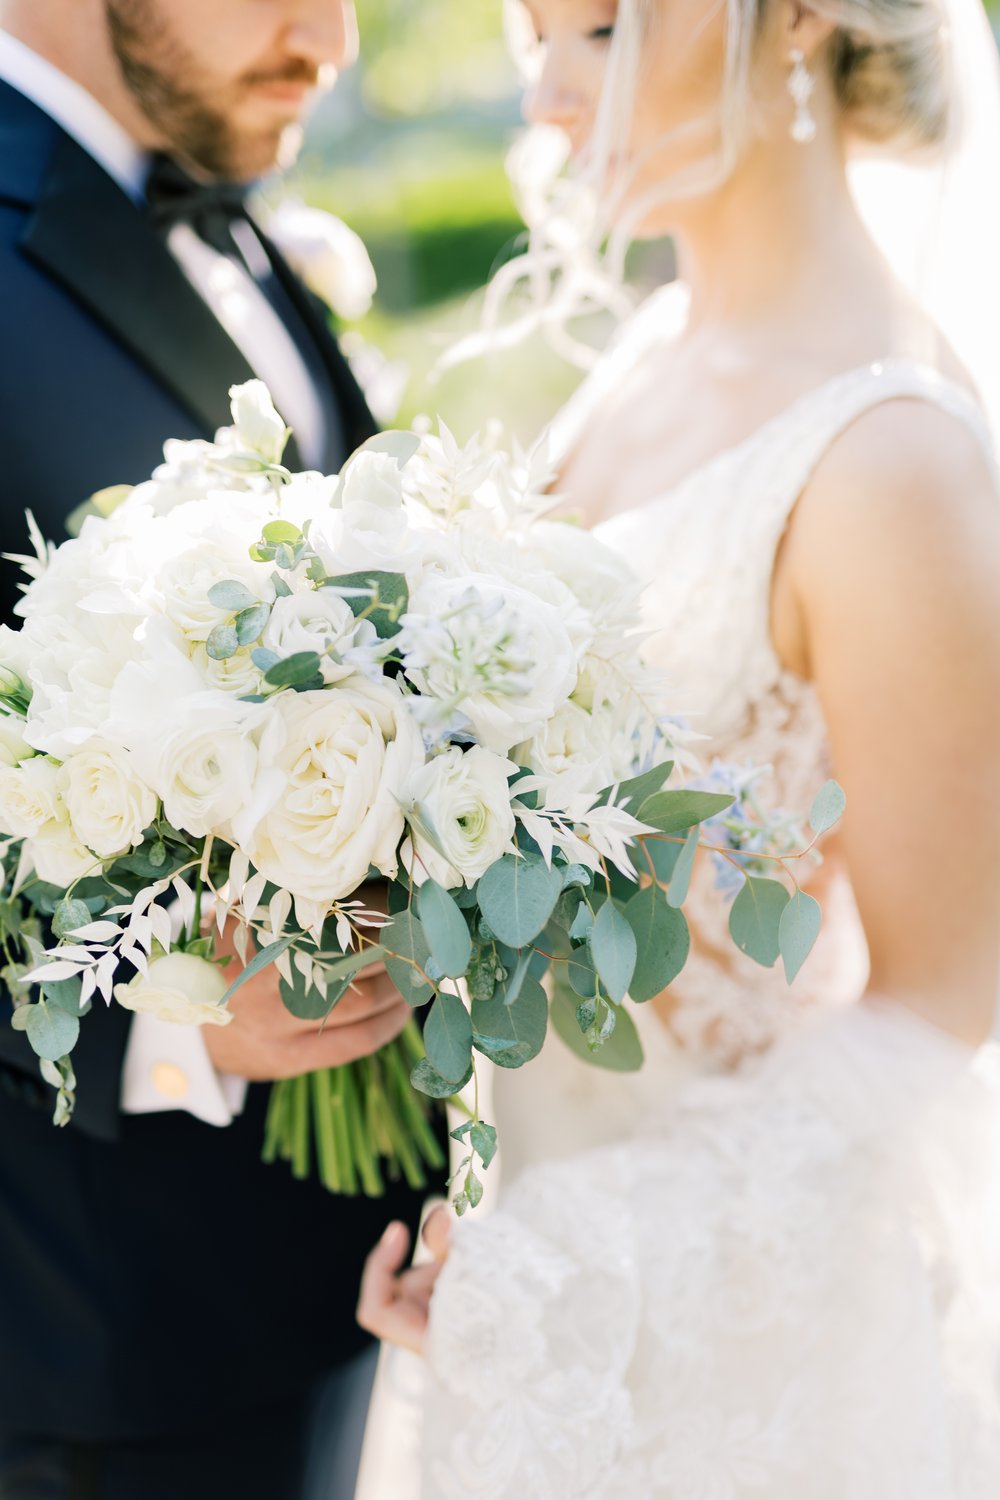 Kolettis Wedding Bridgewater Club elegant white florals and greenery bridal bouquet.jpg